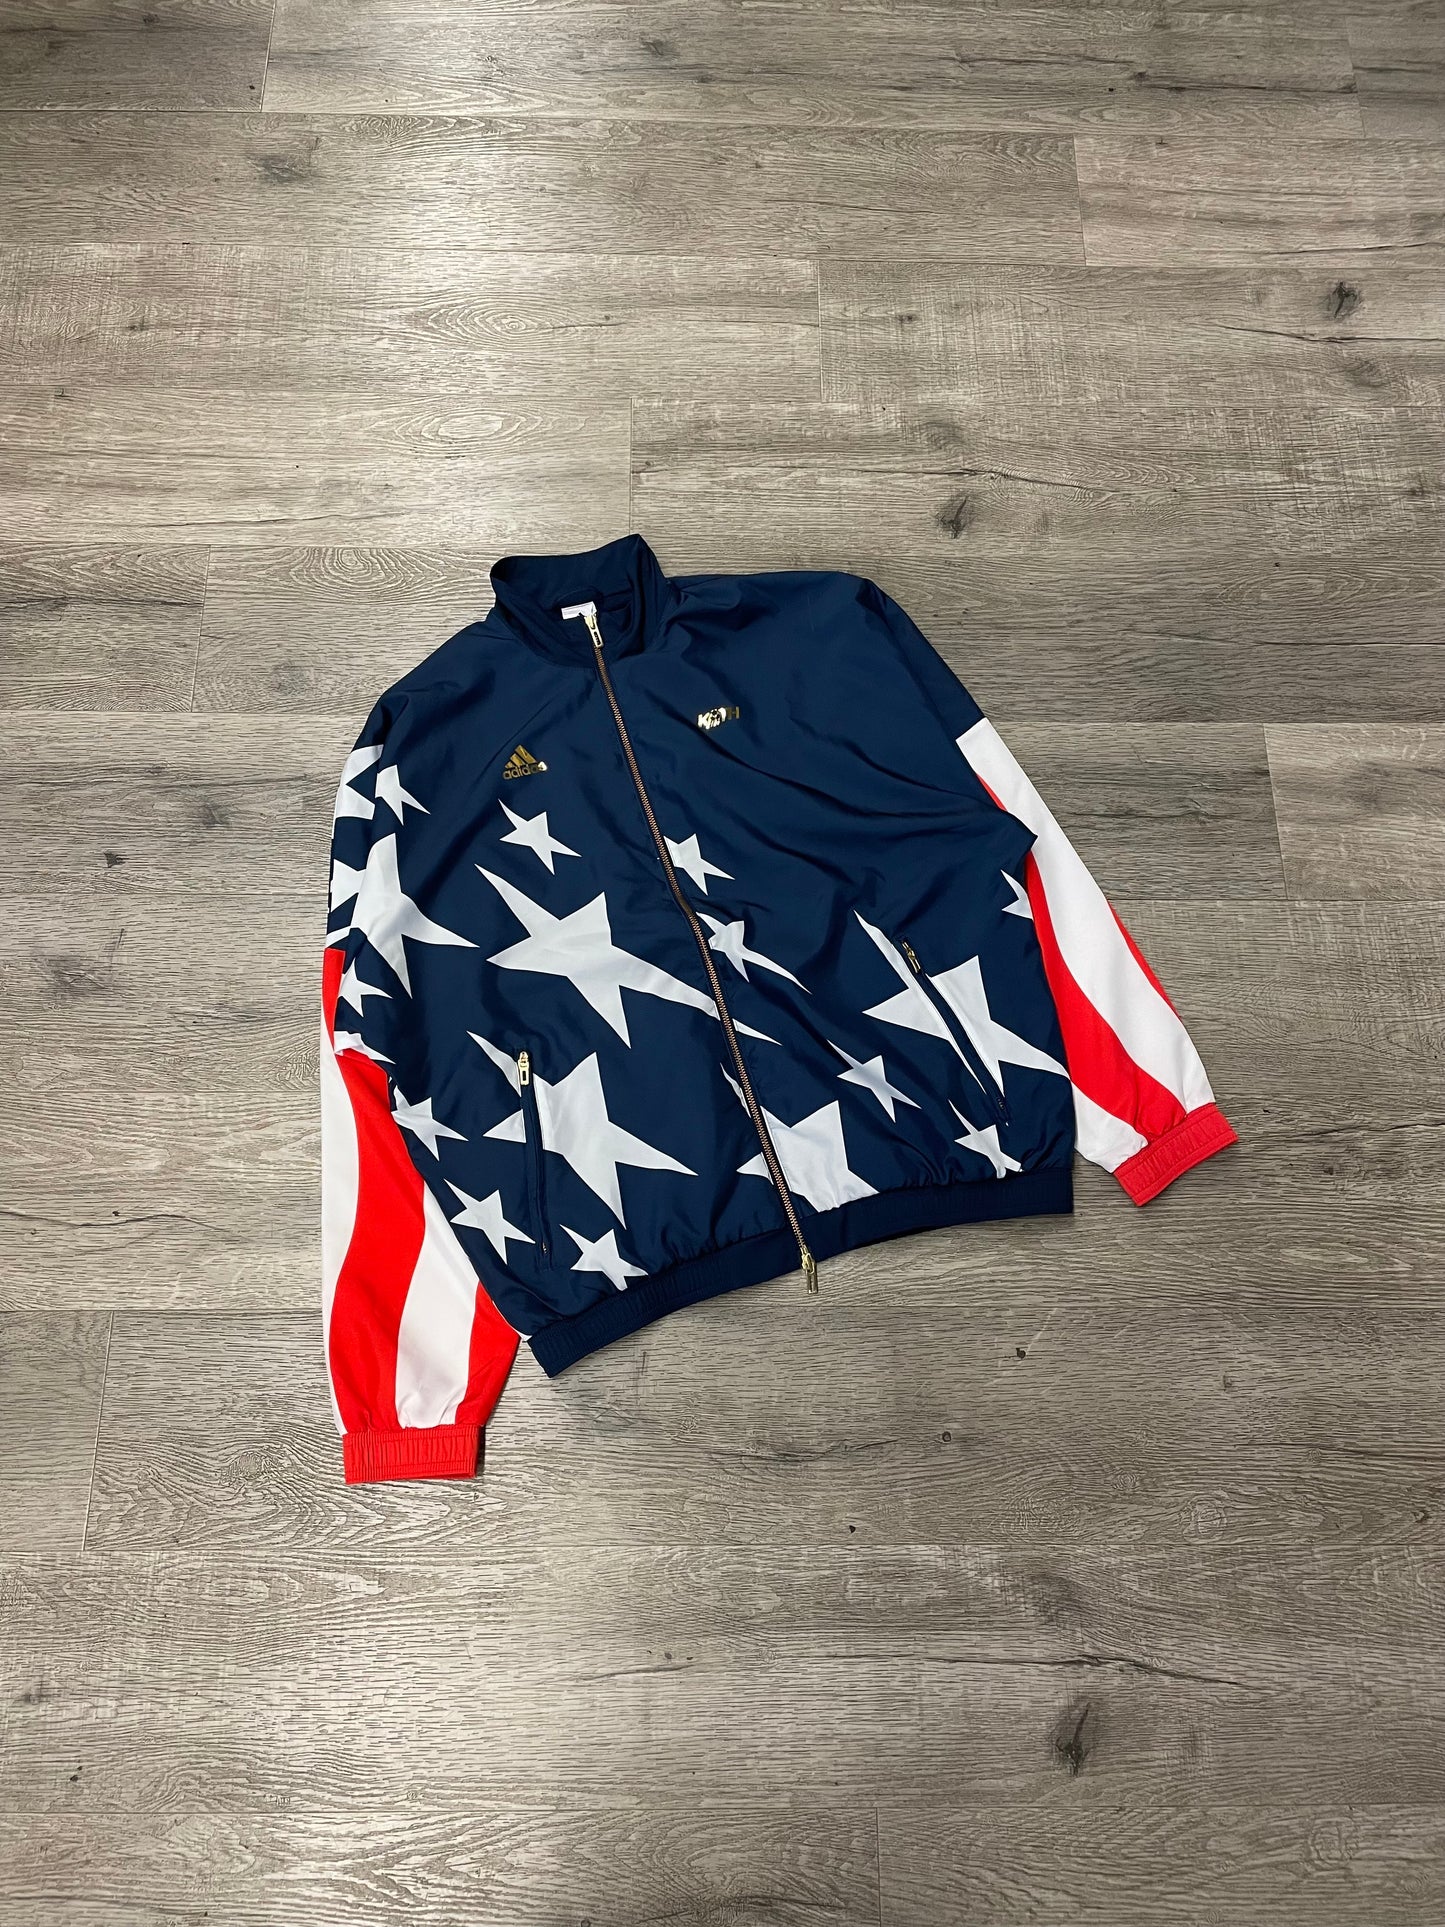 Kith Adidas USA Jacket